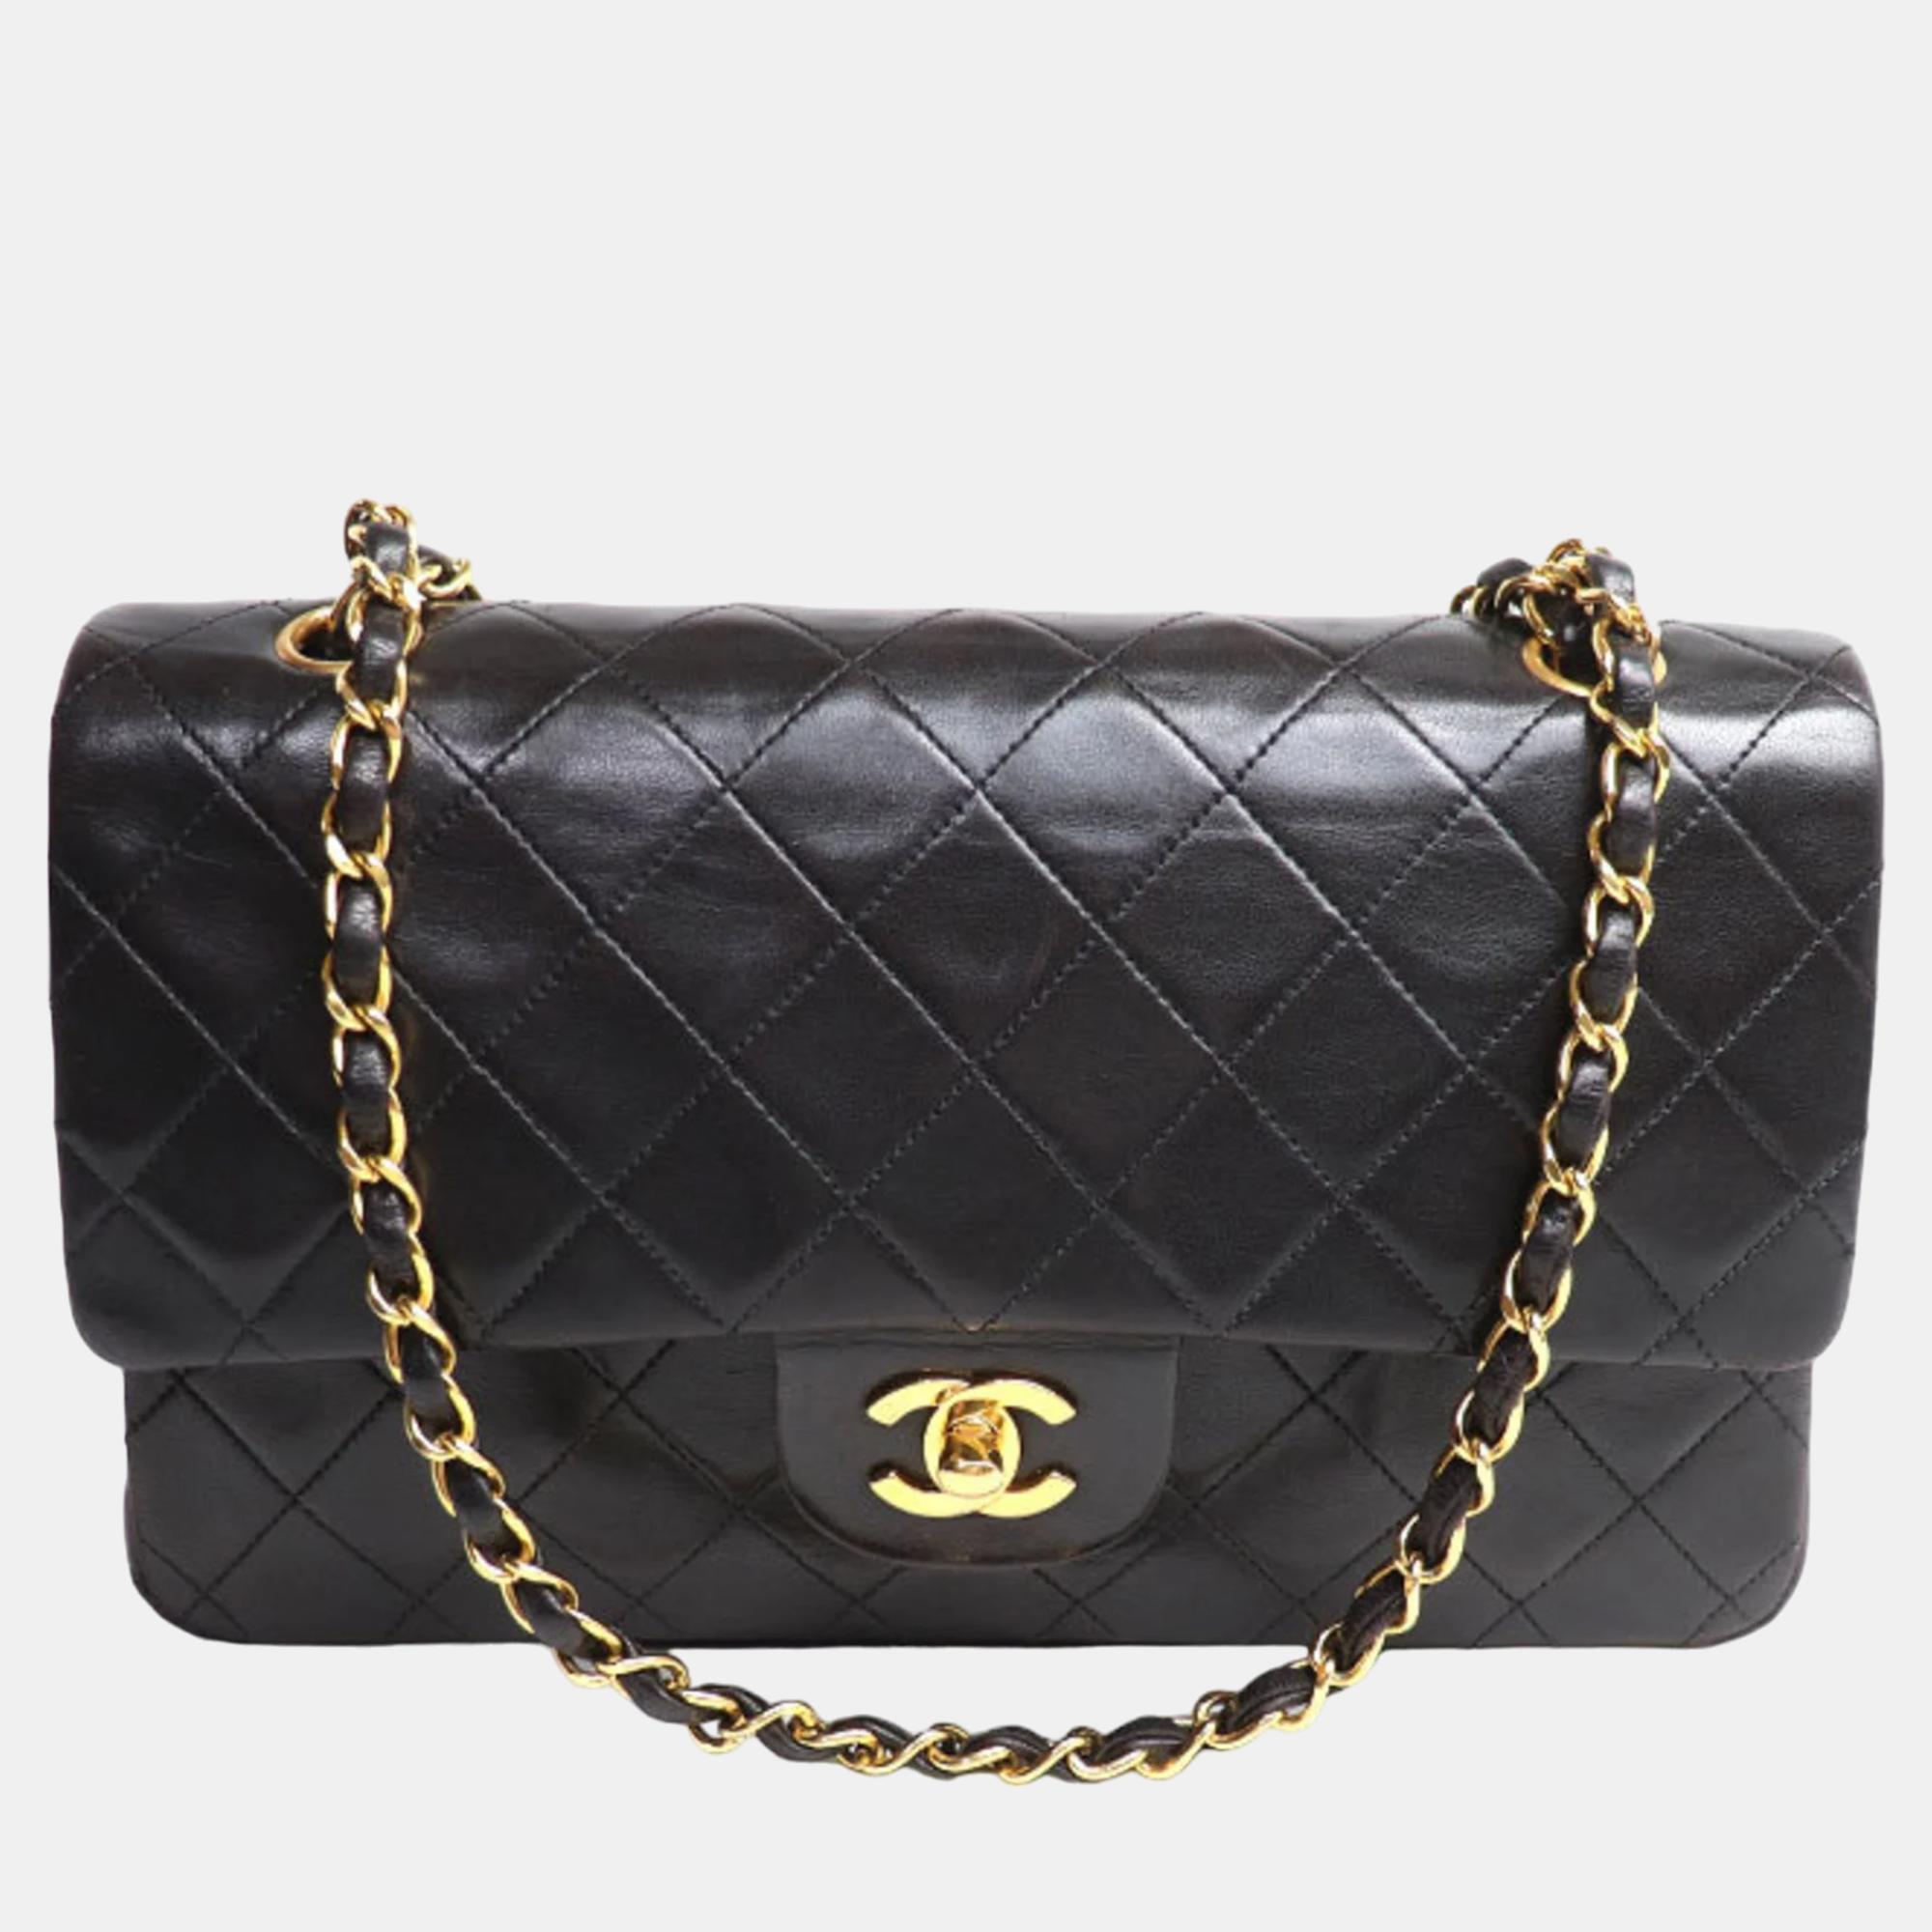 Chanel black lambskin leather  classic double flap shoulder bag